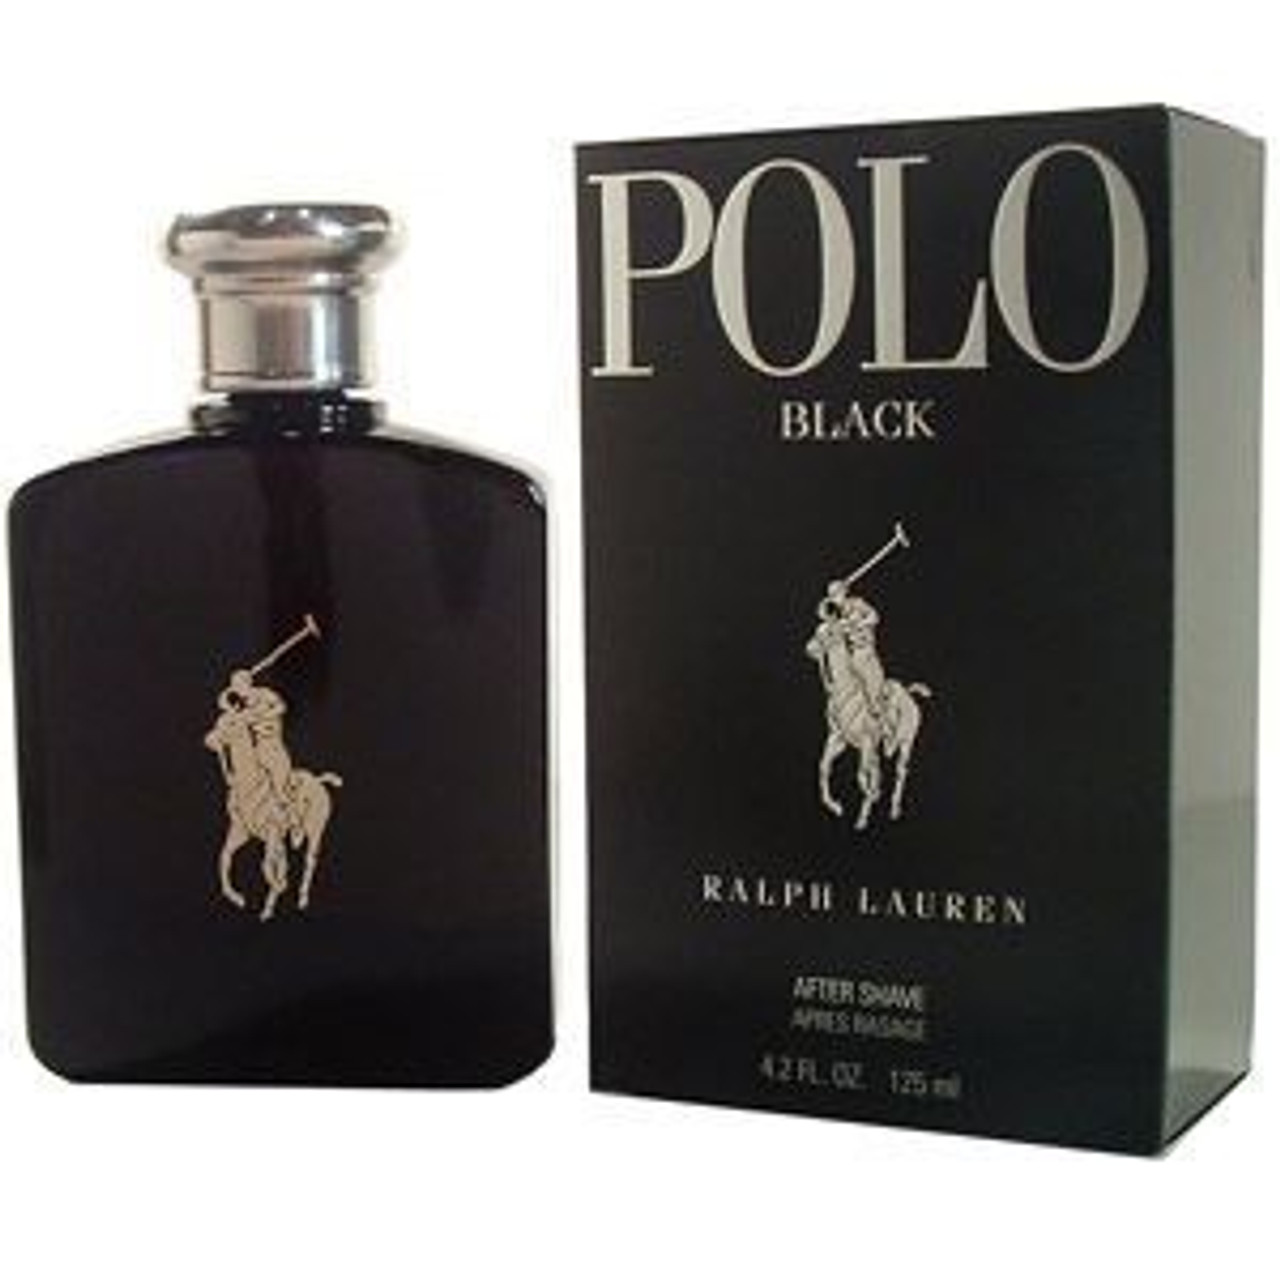 Polo Black by Ralph Lauren 1.36oz Eau 